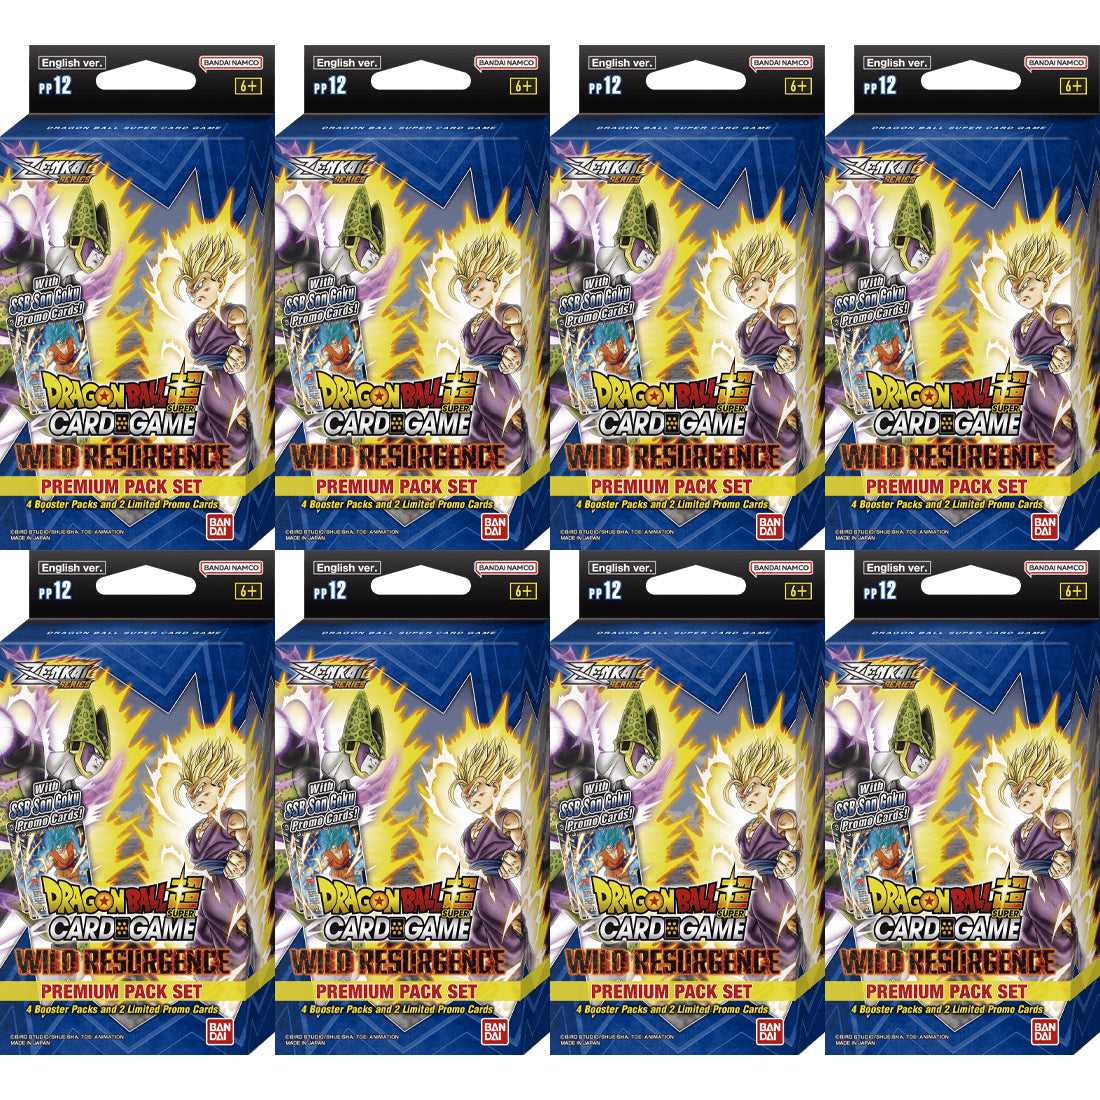 DragonBall Super Card Game WILD RESURGENCE Premium Pack Set